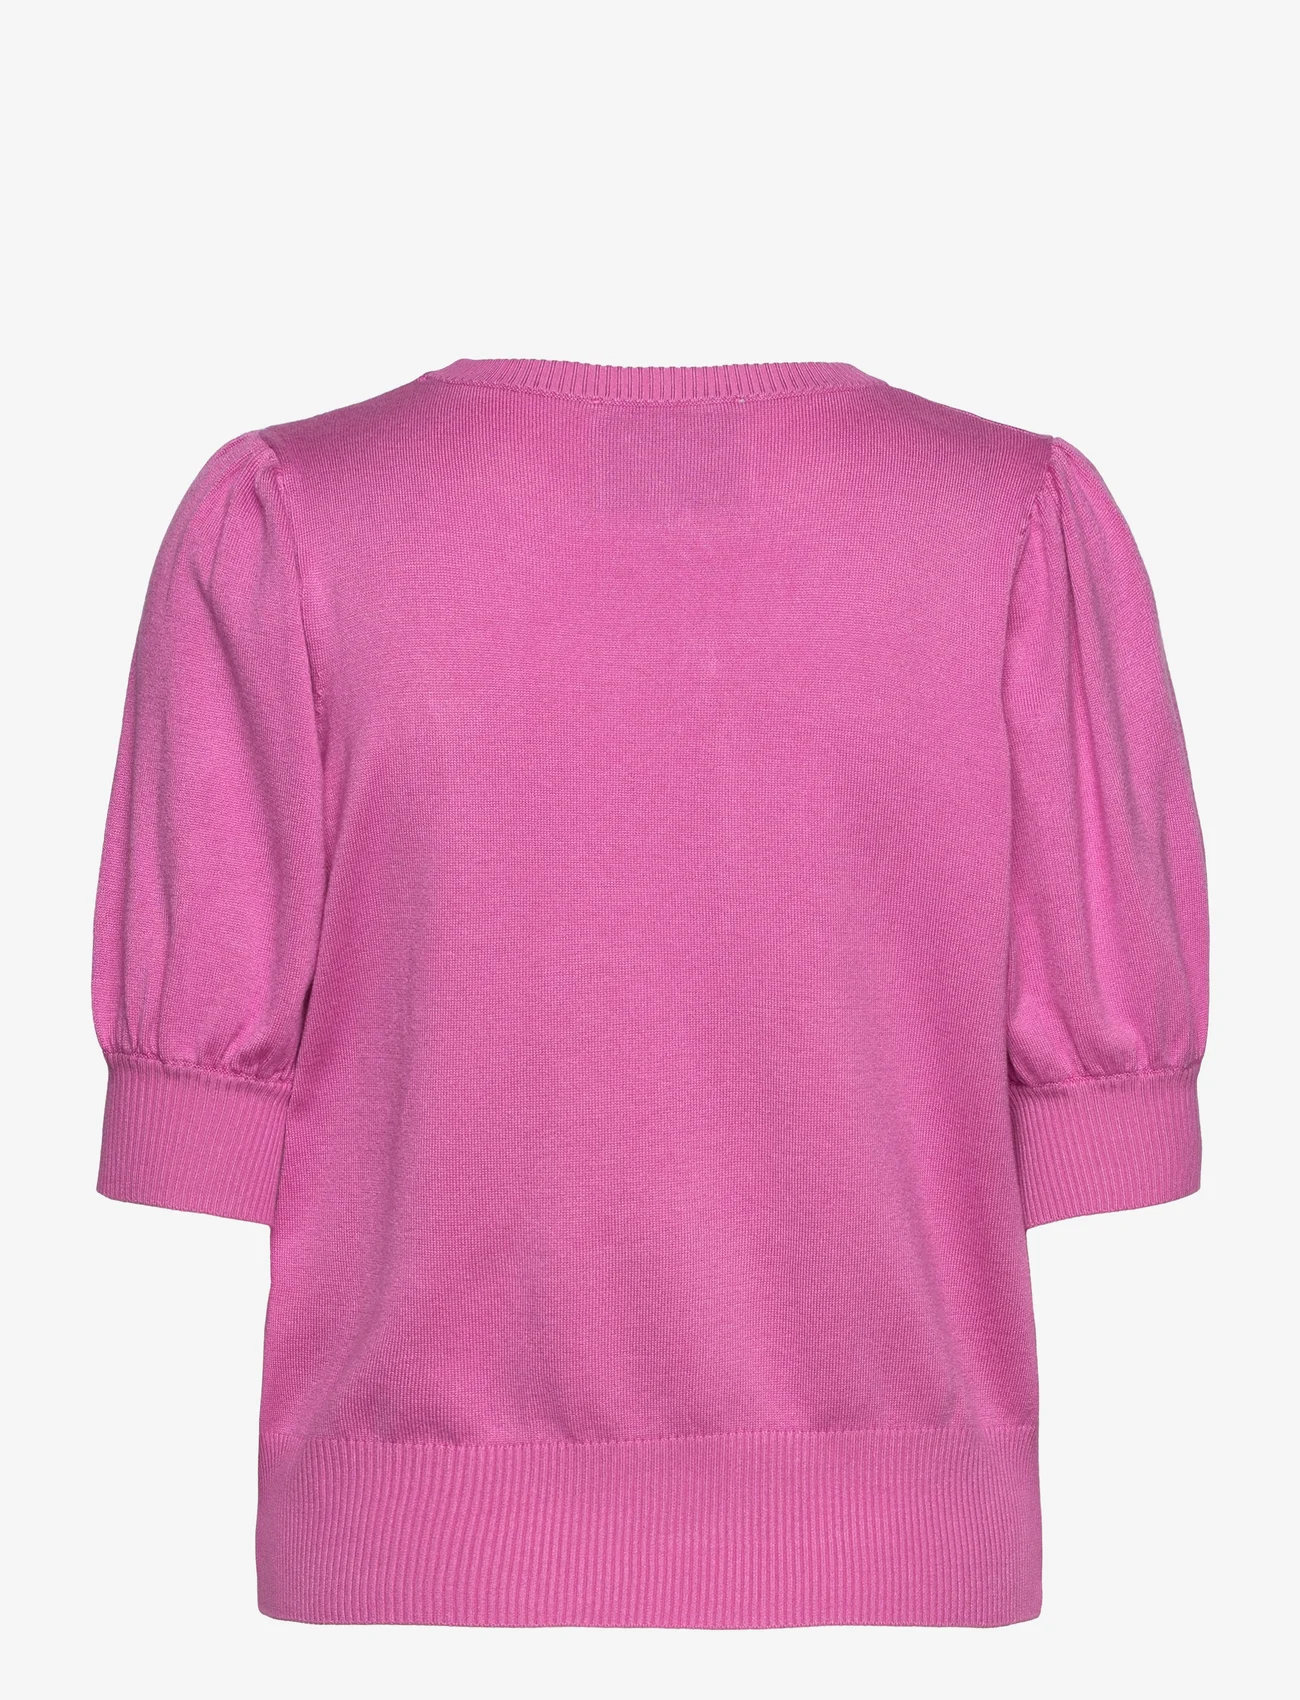 Minus - Liva Strik T-Shirt - pullover - super pink - 1